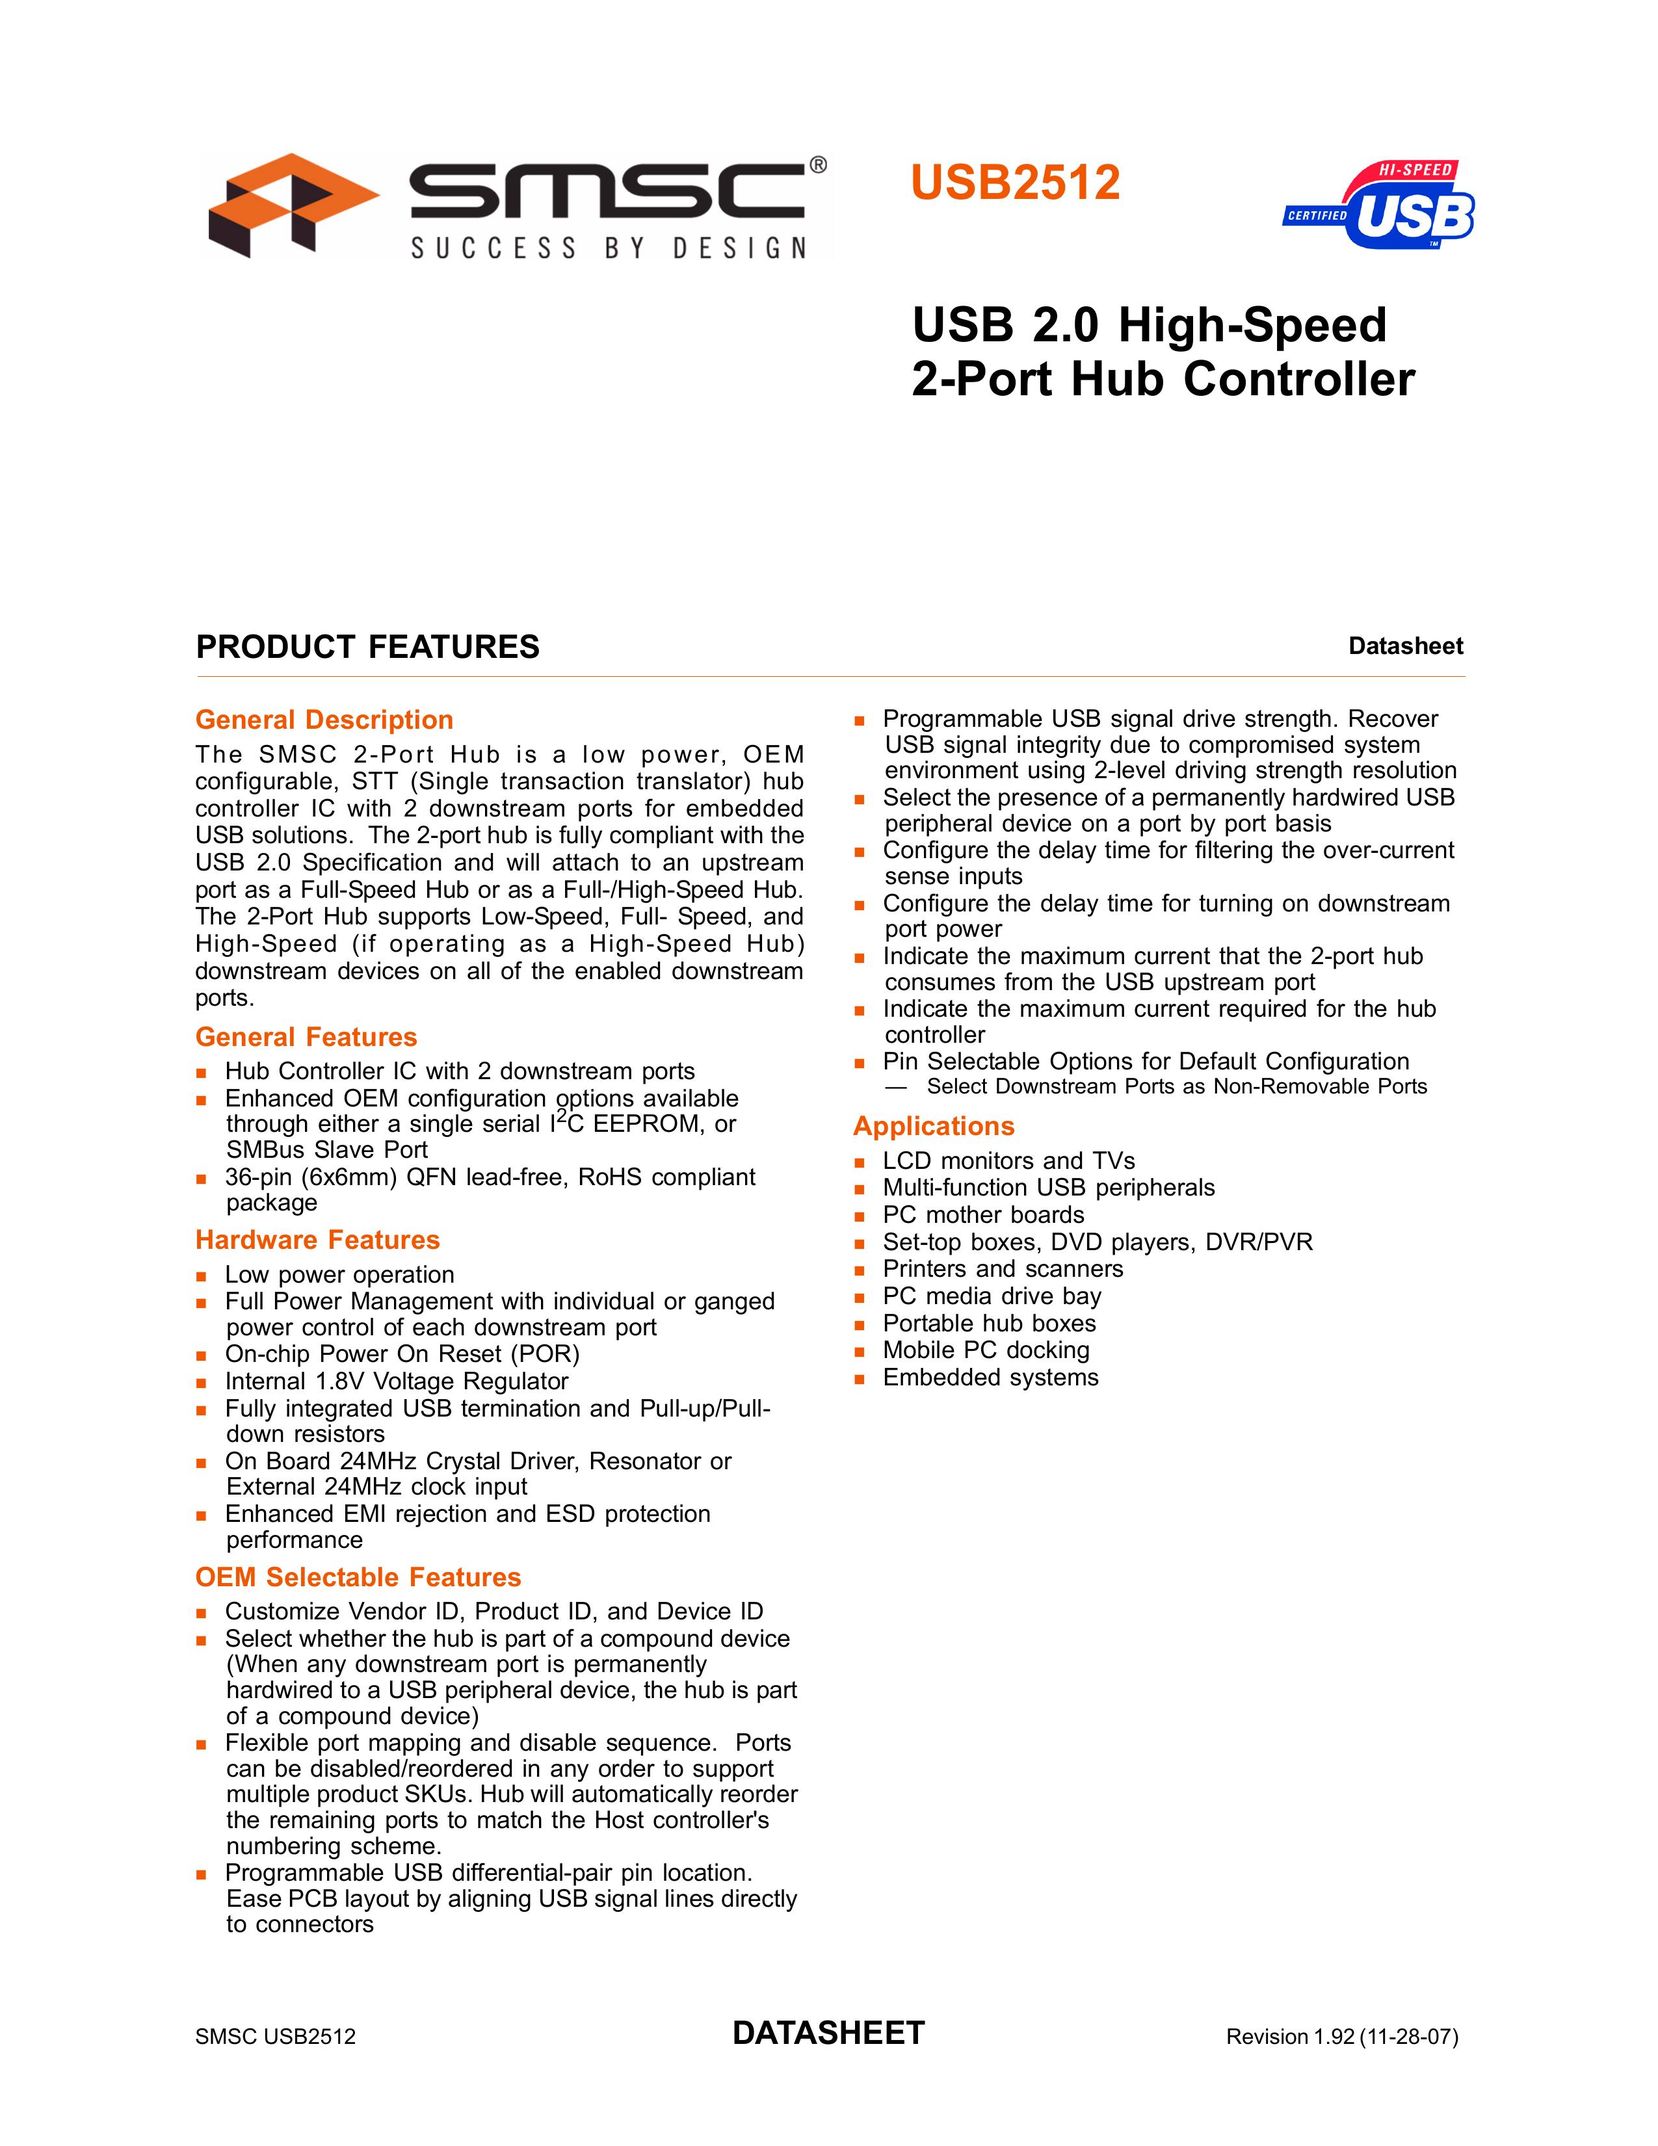 SMSC USB2512 Switch User Manual